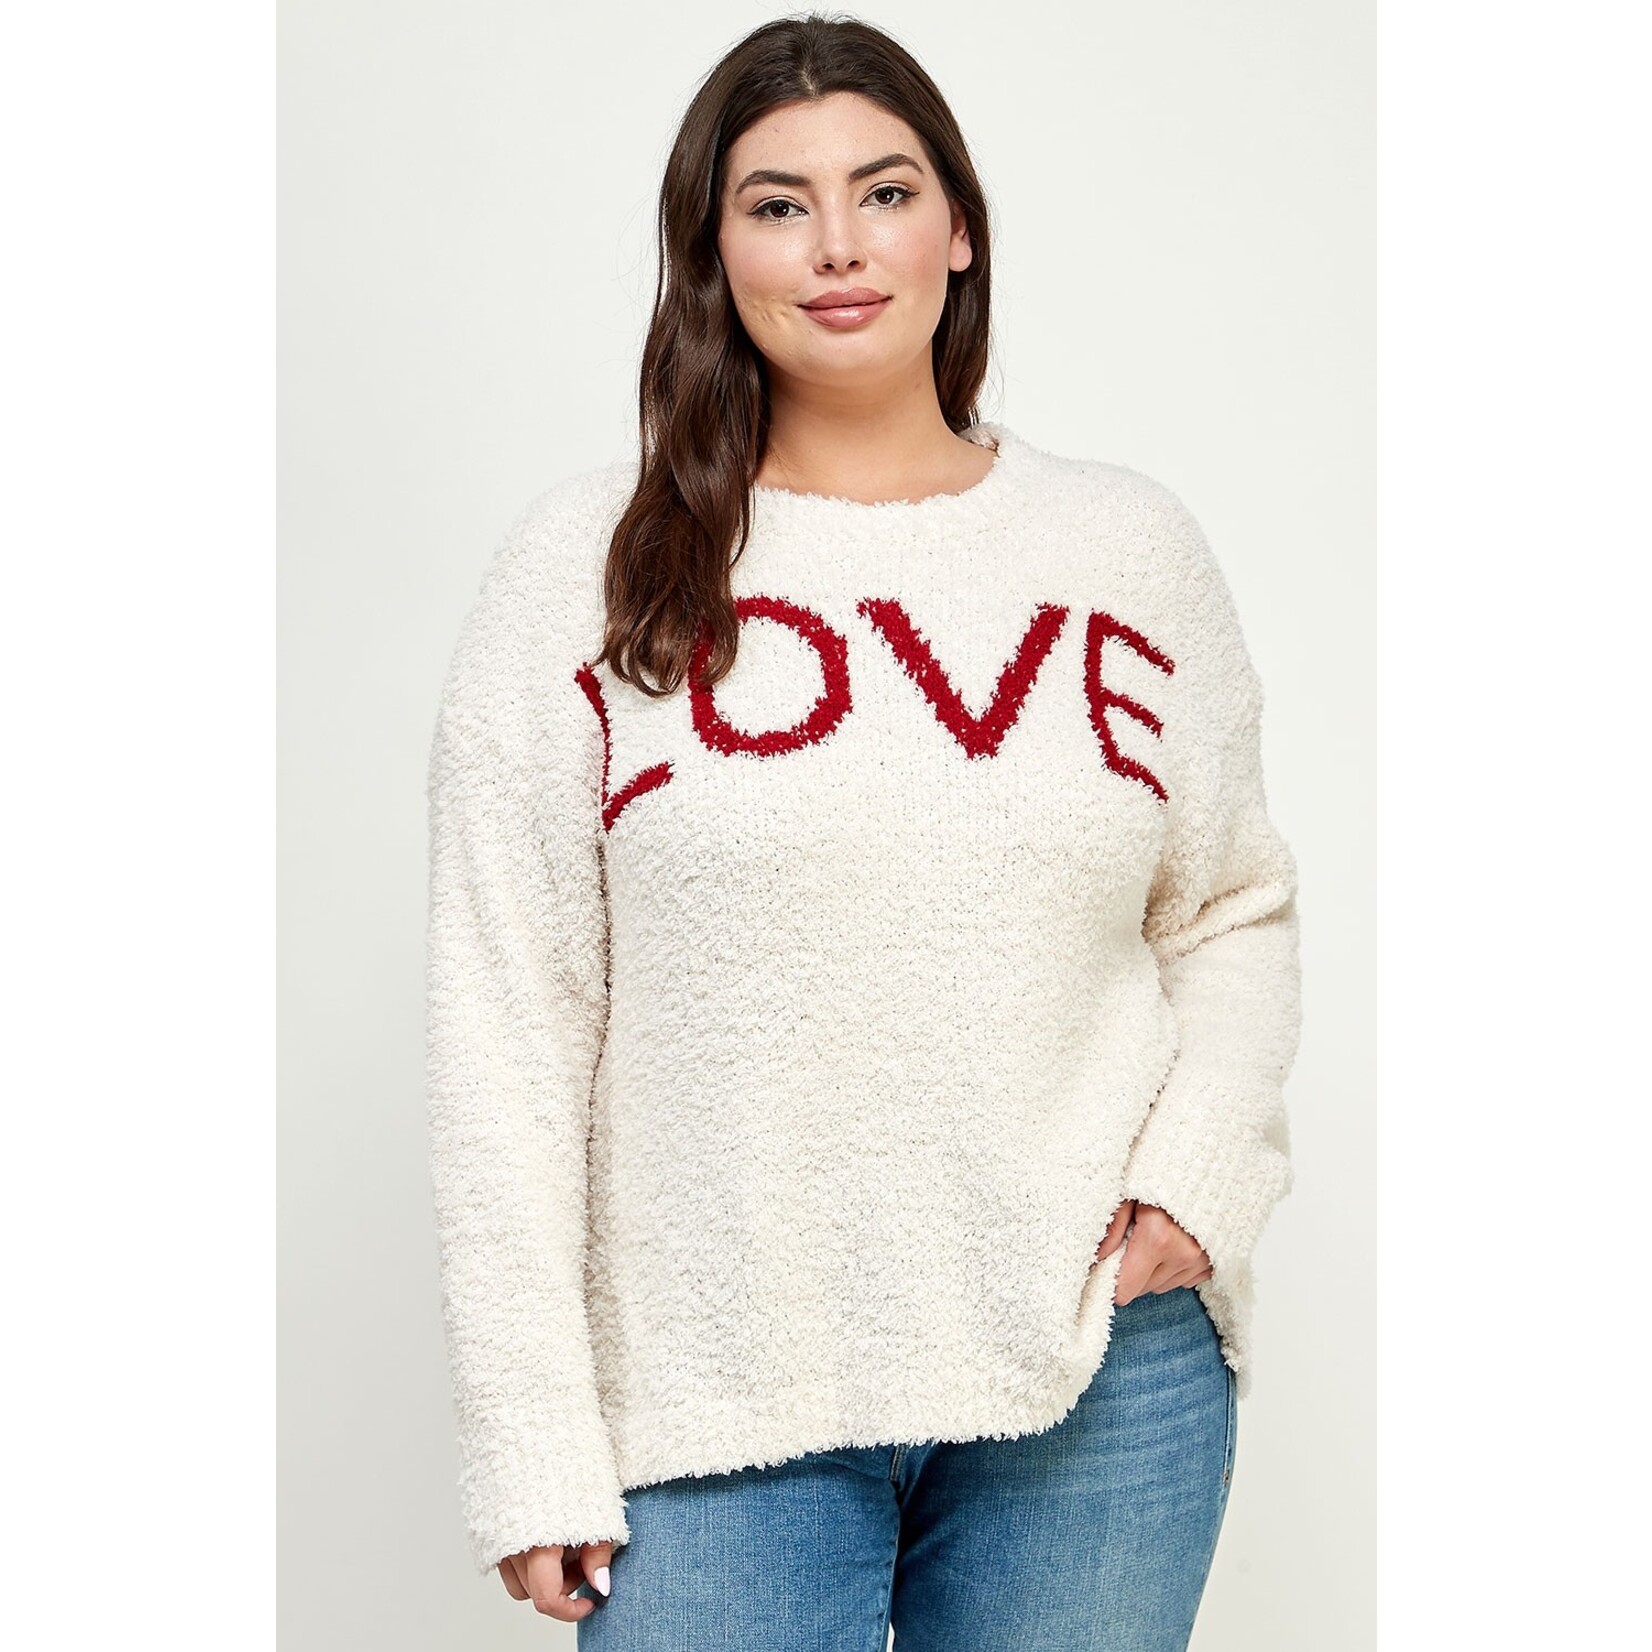 Bestto Love Sweater